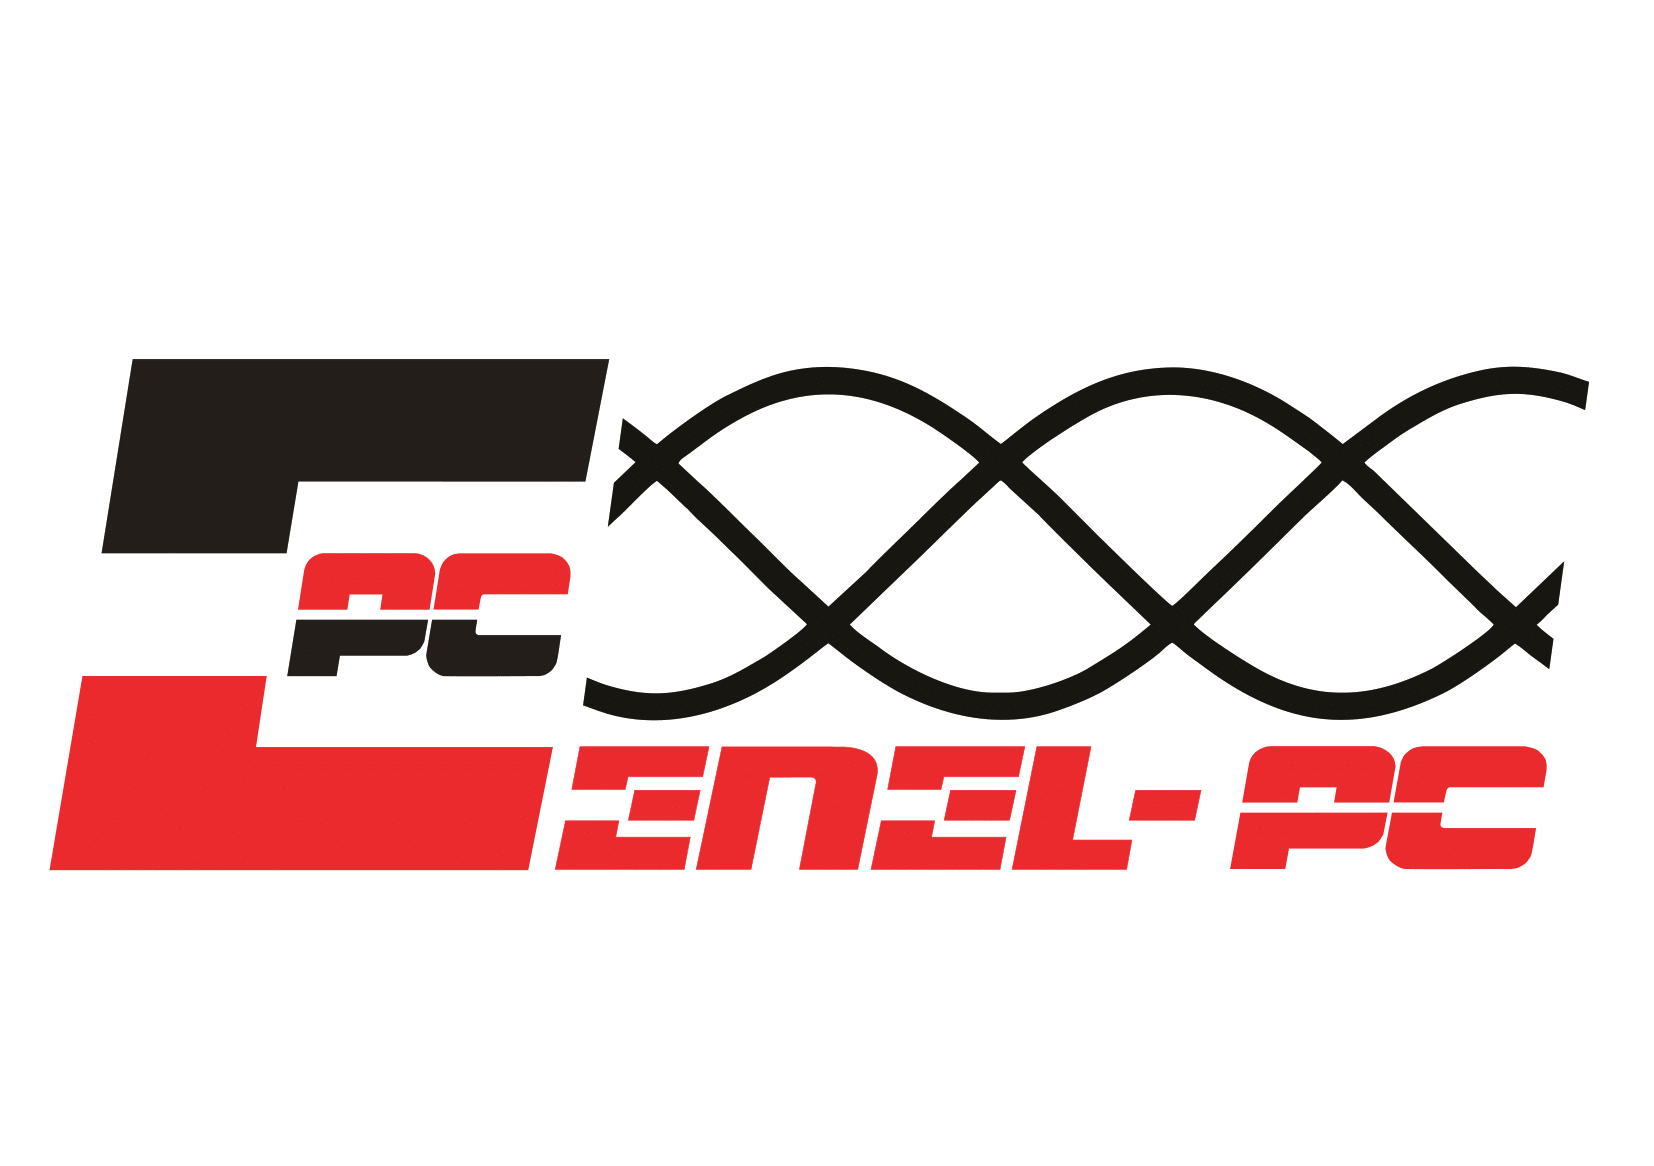 Enel-PC: ENEL-PC | Energoelektronika na miarę twoich potrzeb